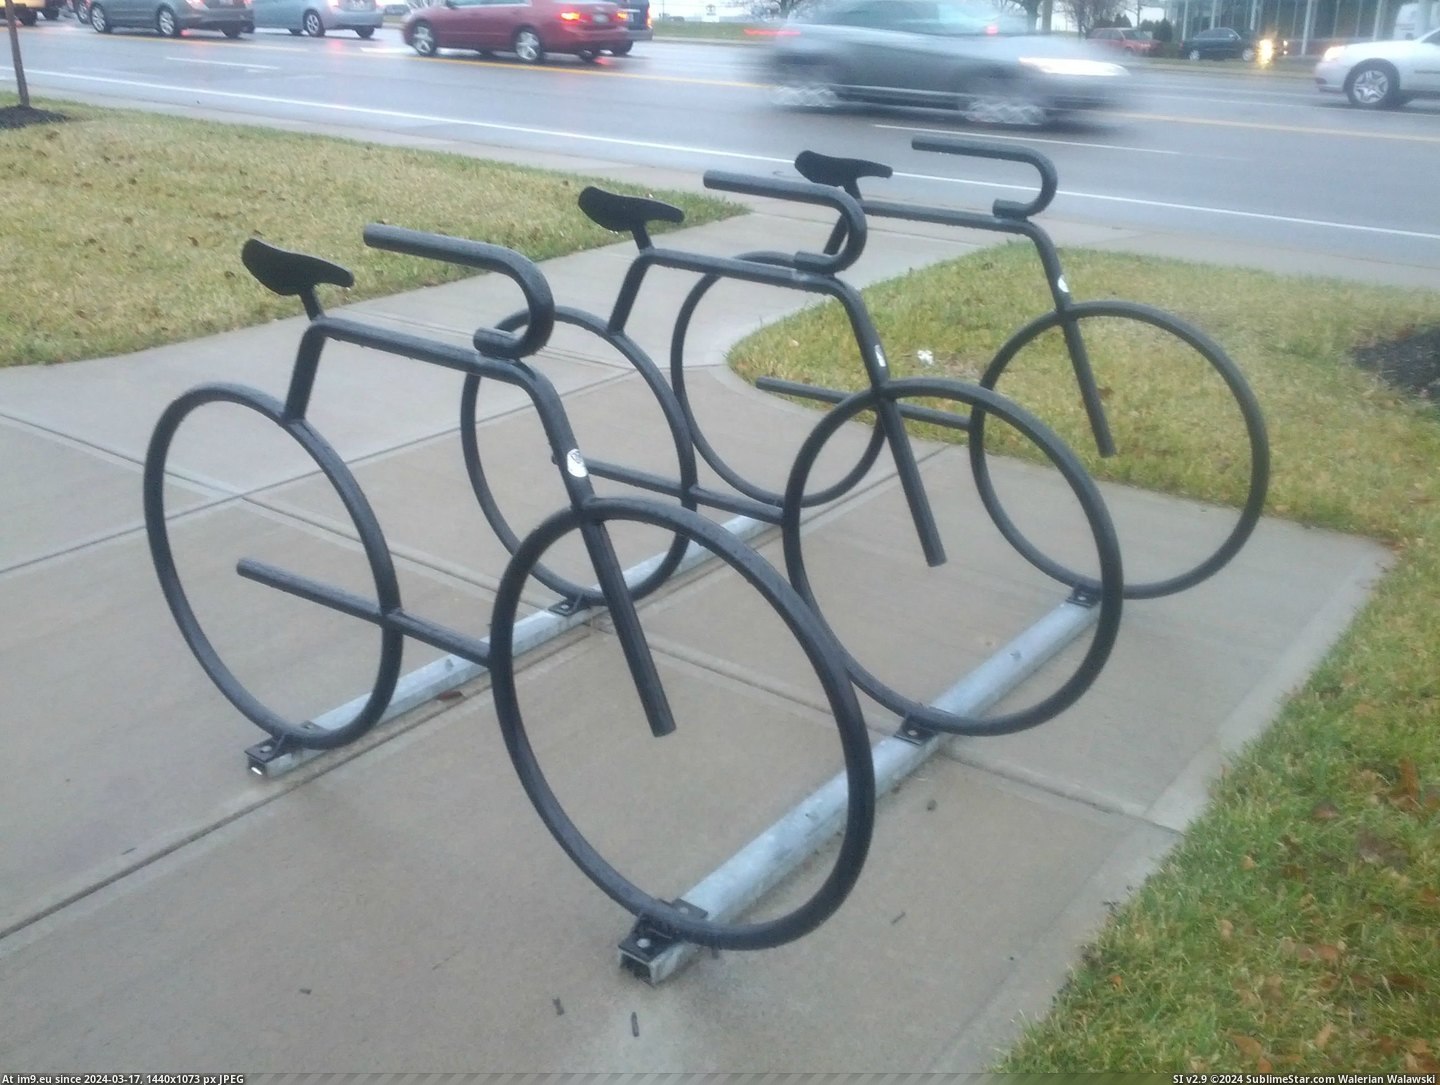 #Bike #Rack #Bikes #Shaped [Mildlyinteresting] This bike rack is shaped like bikes. 1 Pic. (Bild von album My r/MILDLYINTERESTING favs))